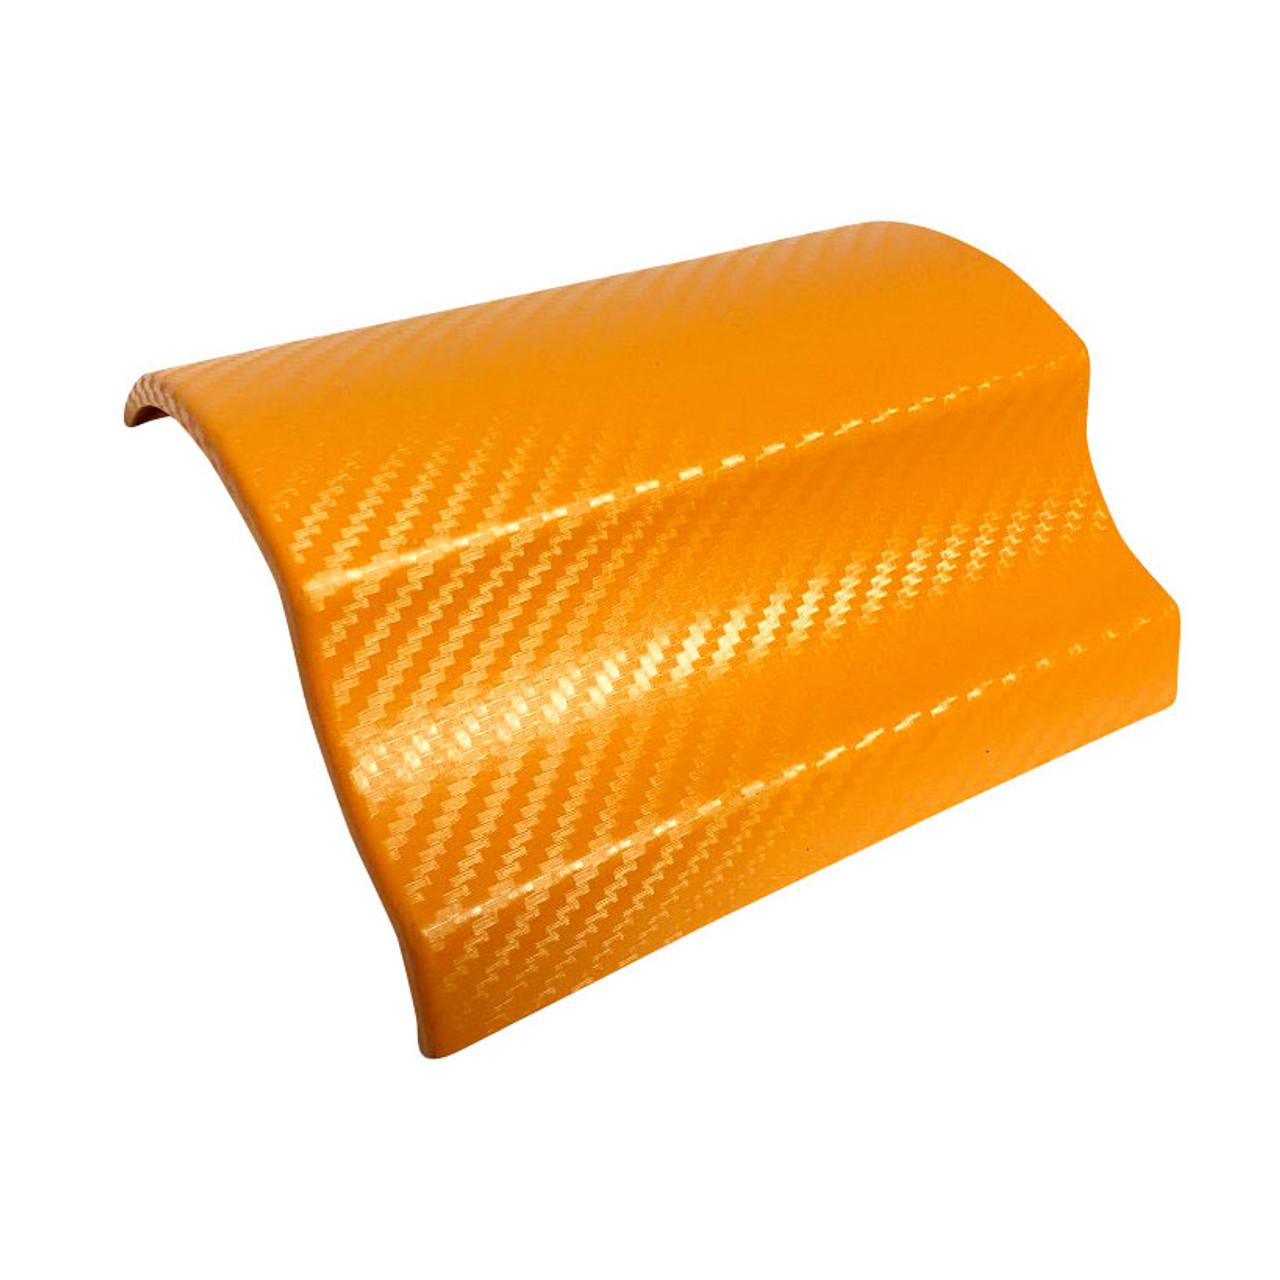 Film carbone orange 3D thermoformable, adhésif imitation carbone